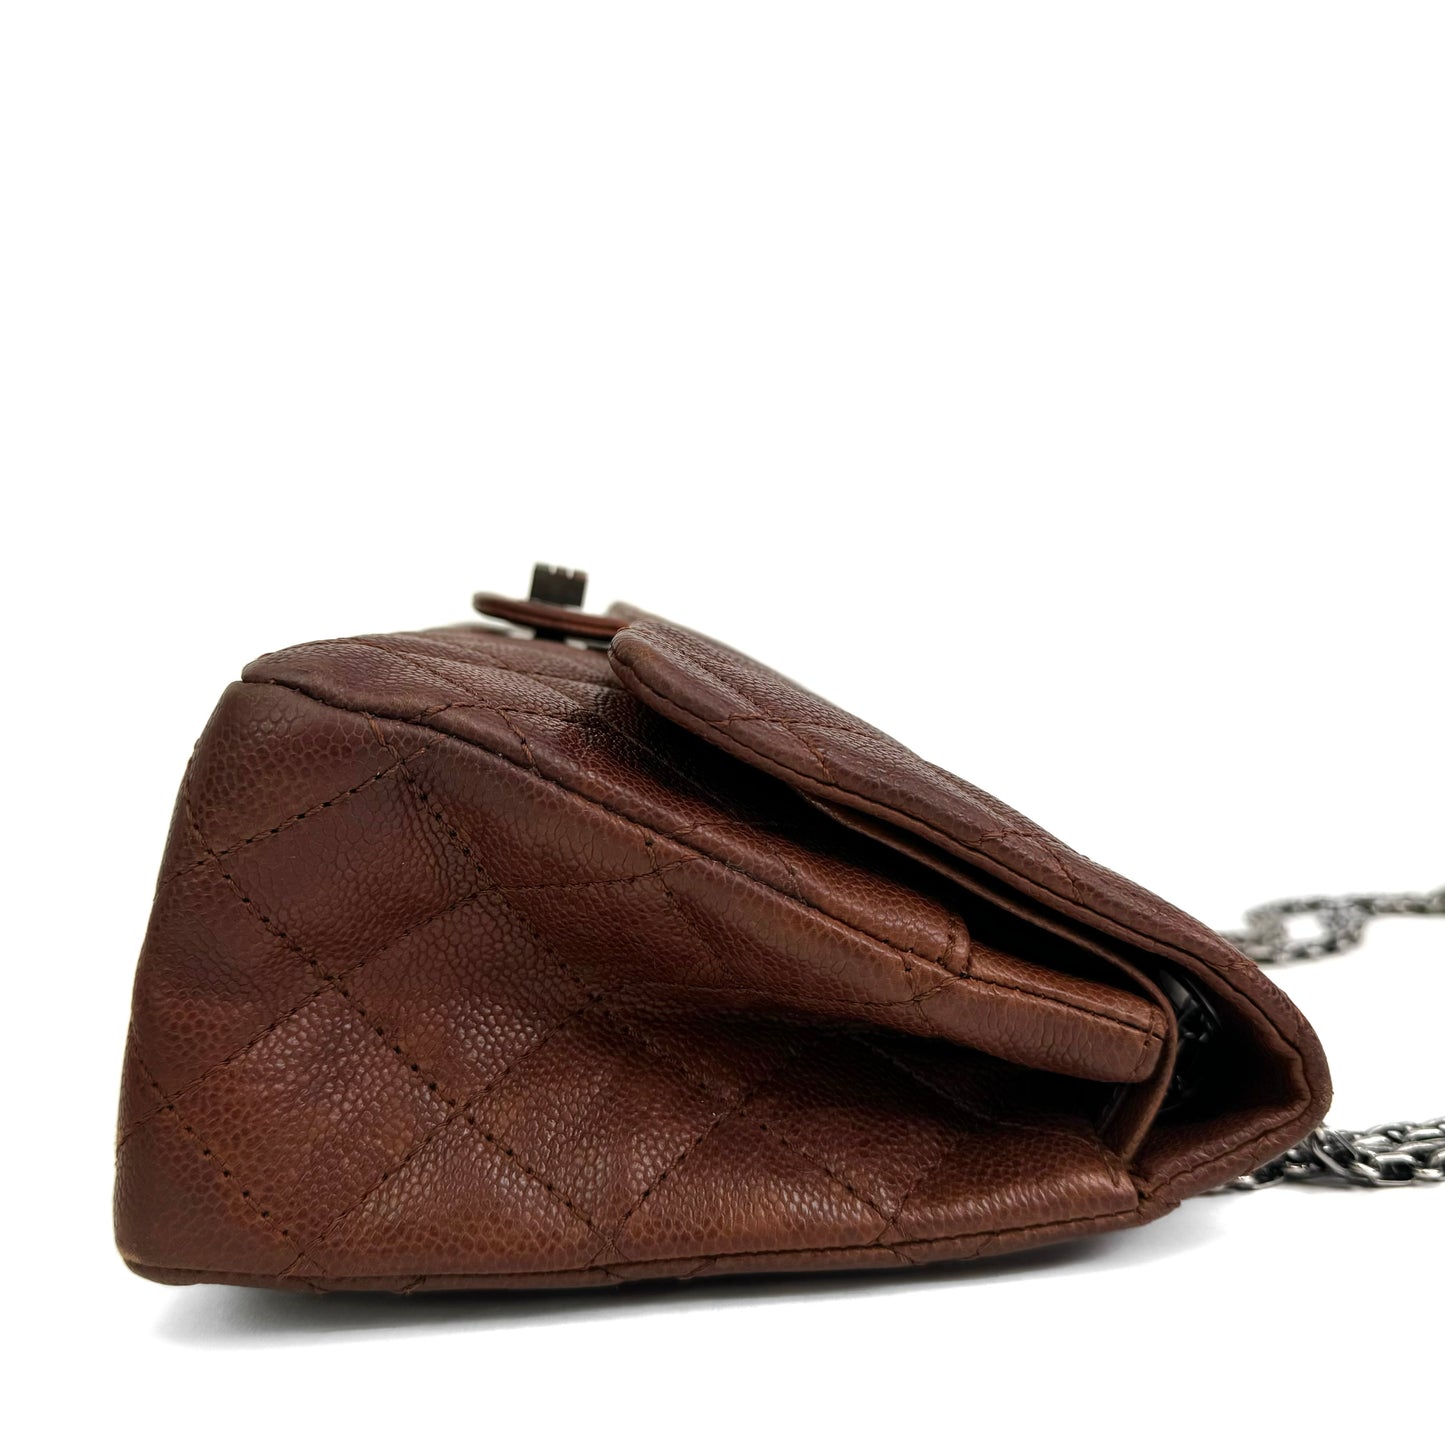 Chanel 2.55 Double Flap Chocolate Medium Bag